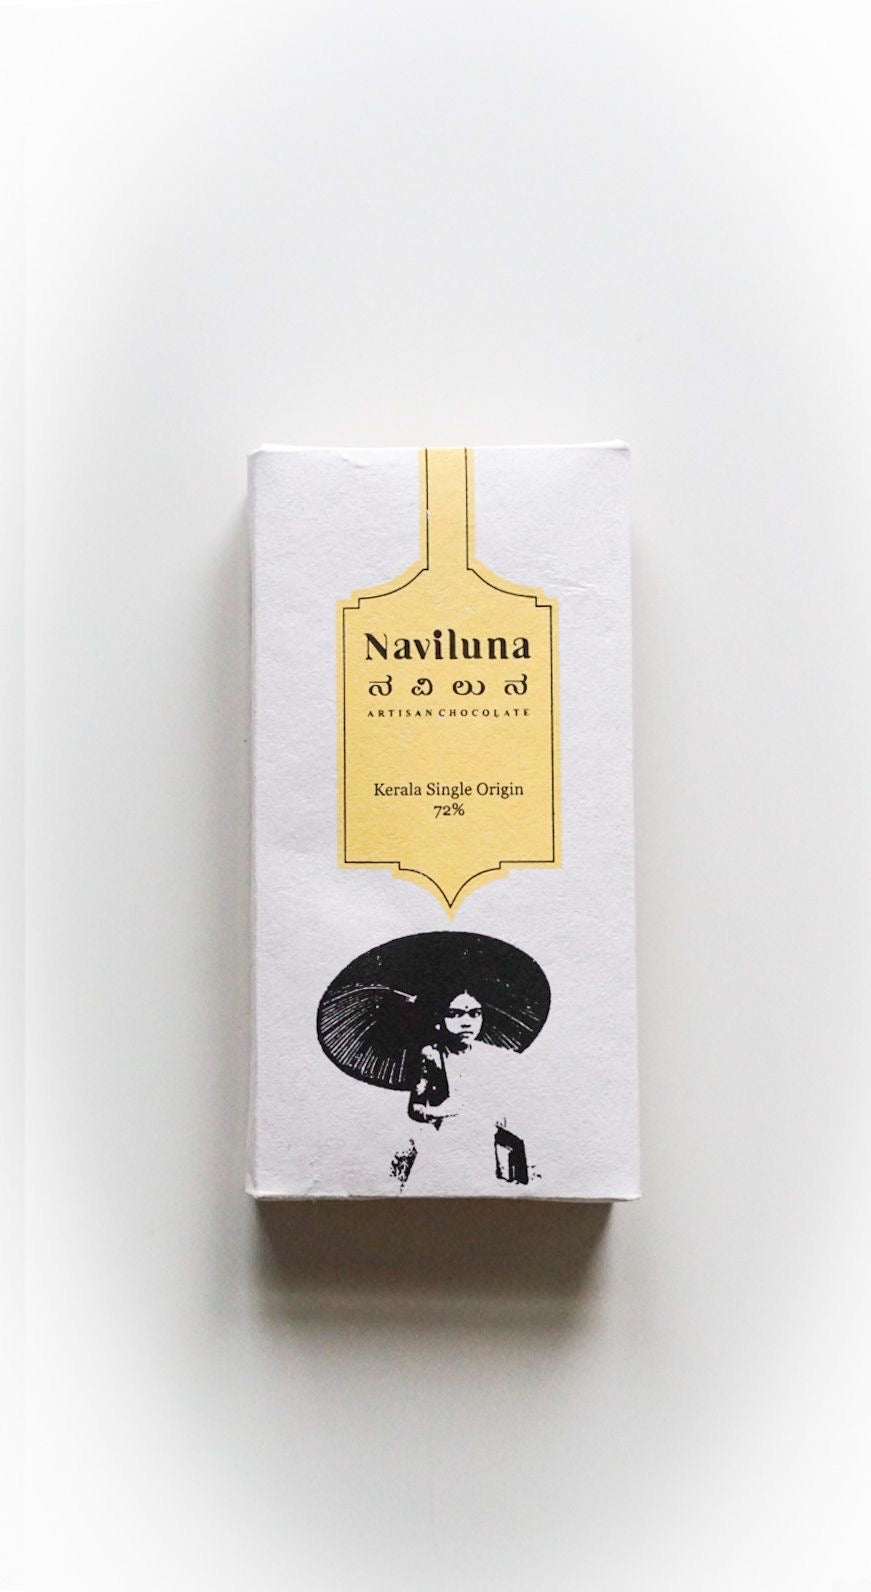 NAVILUNA Classic 72% Kerala Single Origin Chocolate Bar